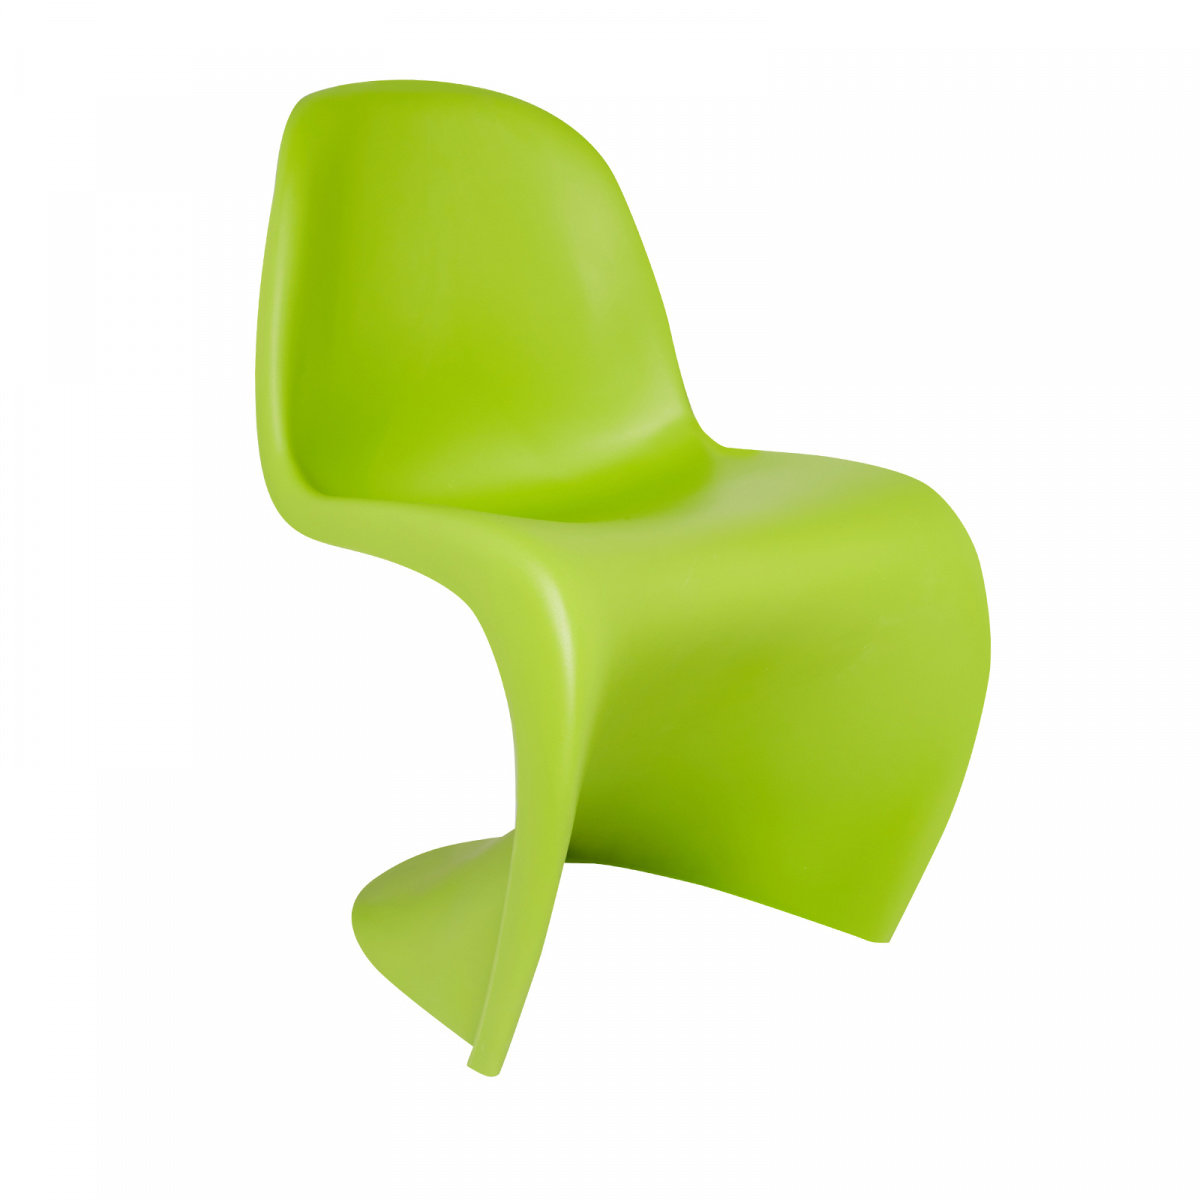 стул черно зеленого цвета